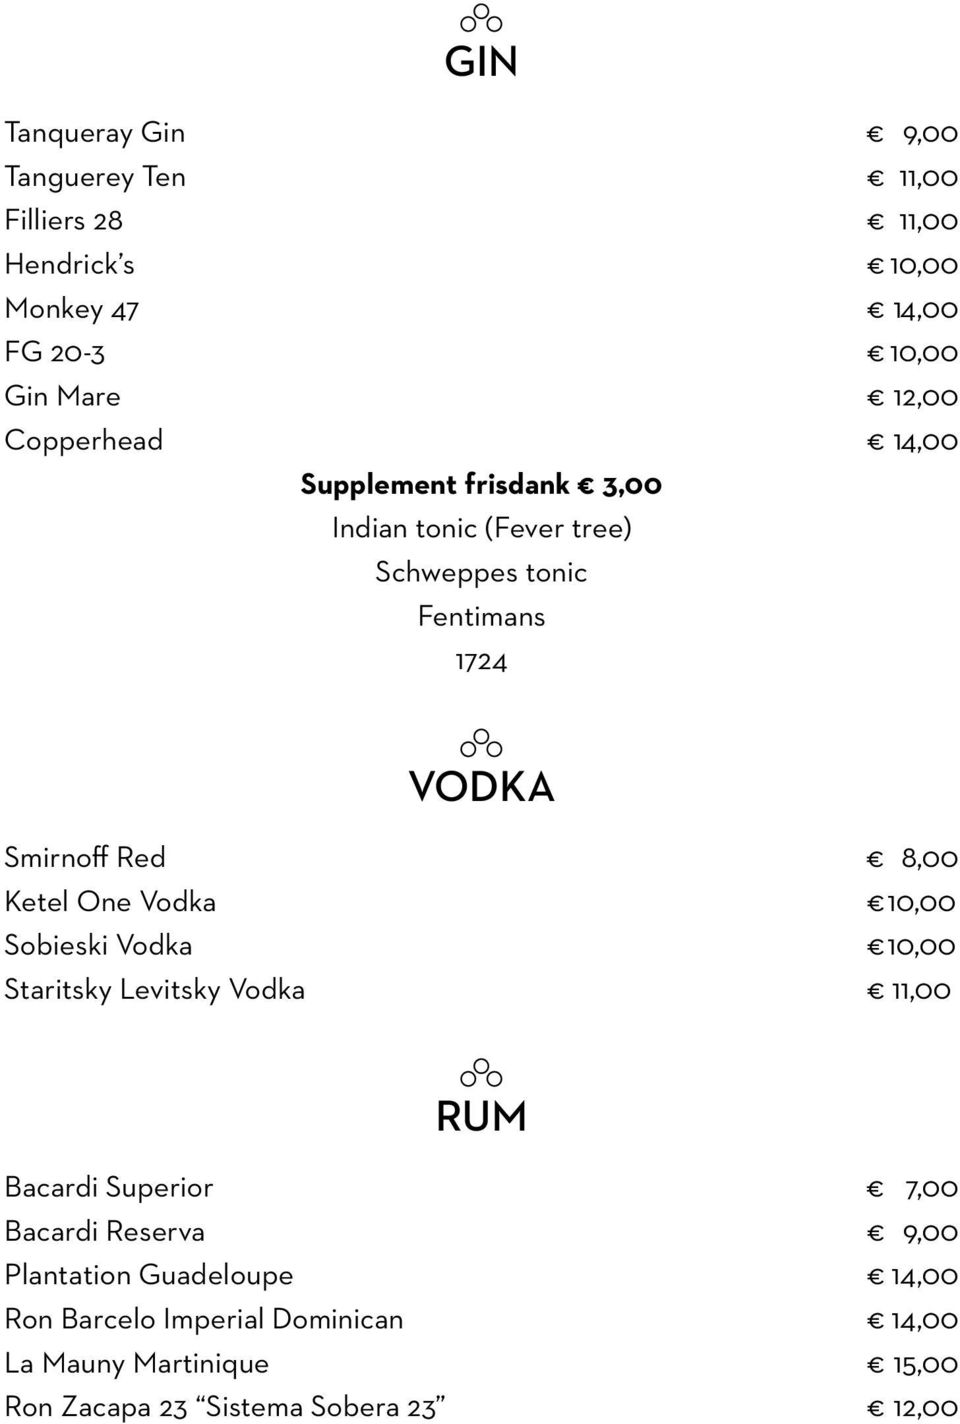 Ketel One Vodka 10,00 Sobieski Vodka 10,00 Staritsky Levitsky Vodka 11,00 RUM Bacardi Superior 7,00 Bacardi Reserva 9,00